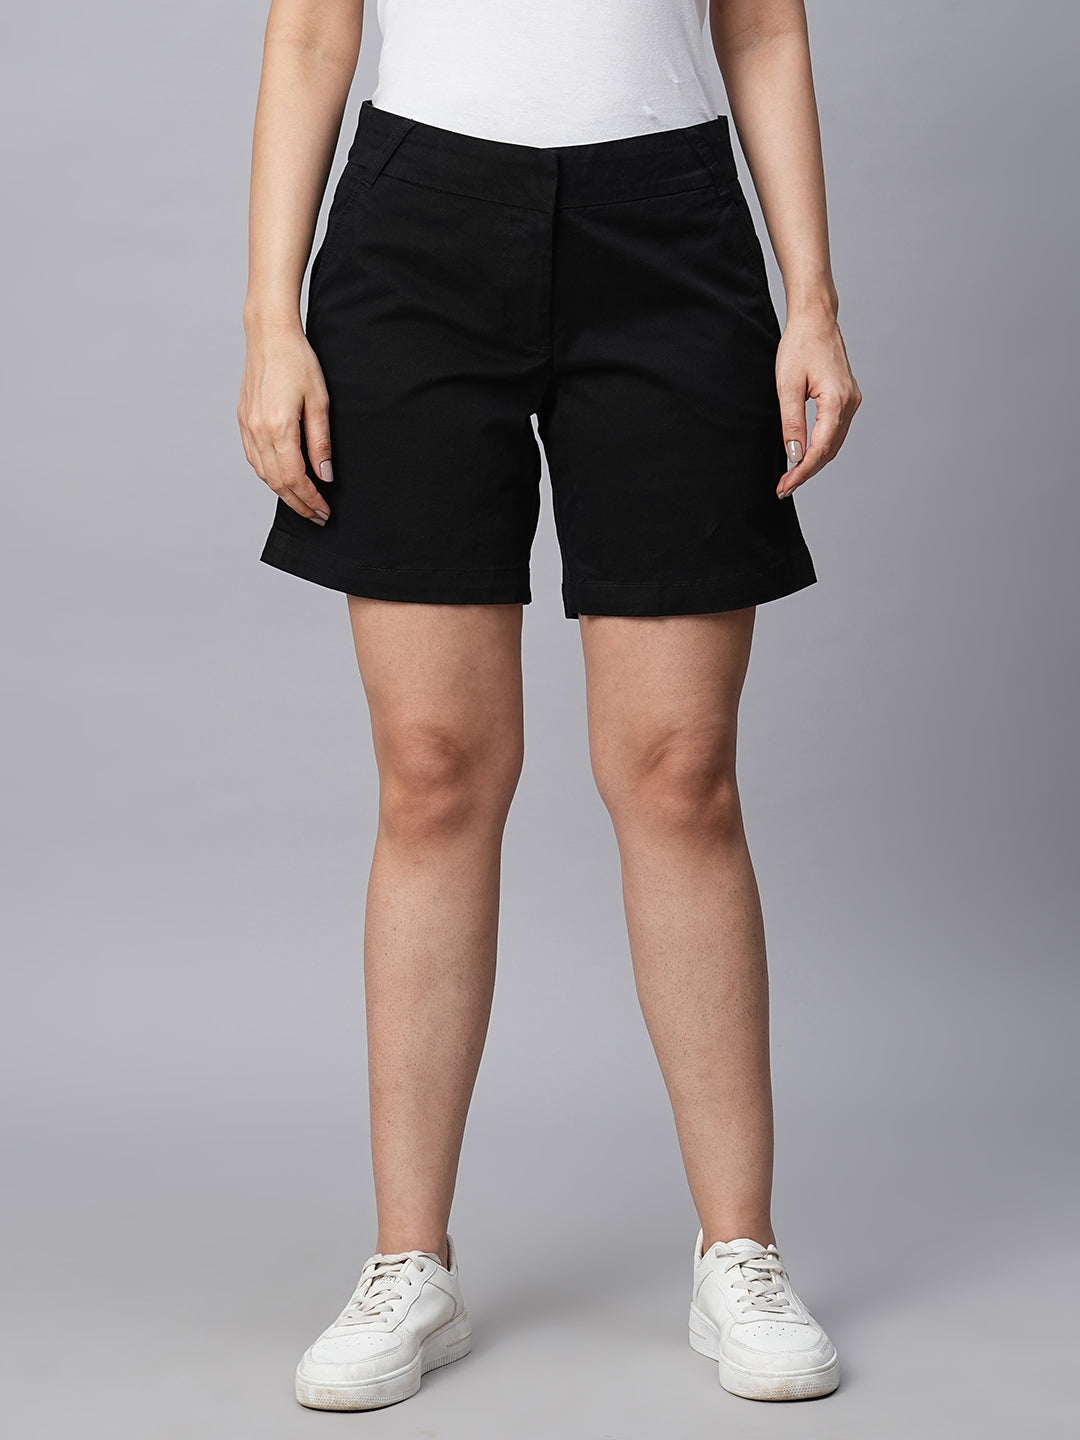 Women's Black Cotton Lycra Regular Fit Shorts